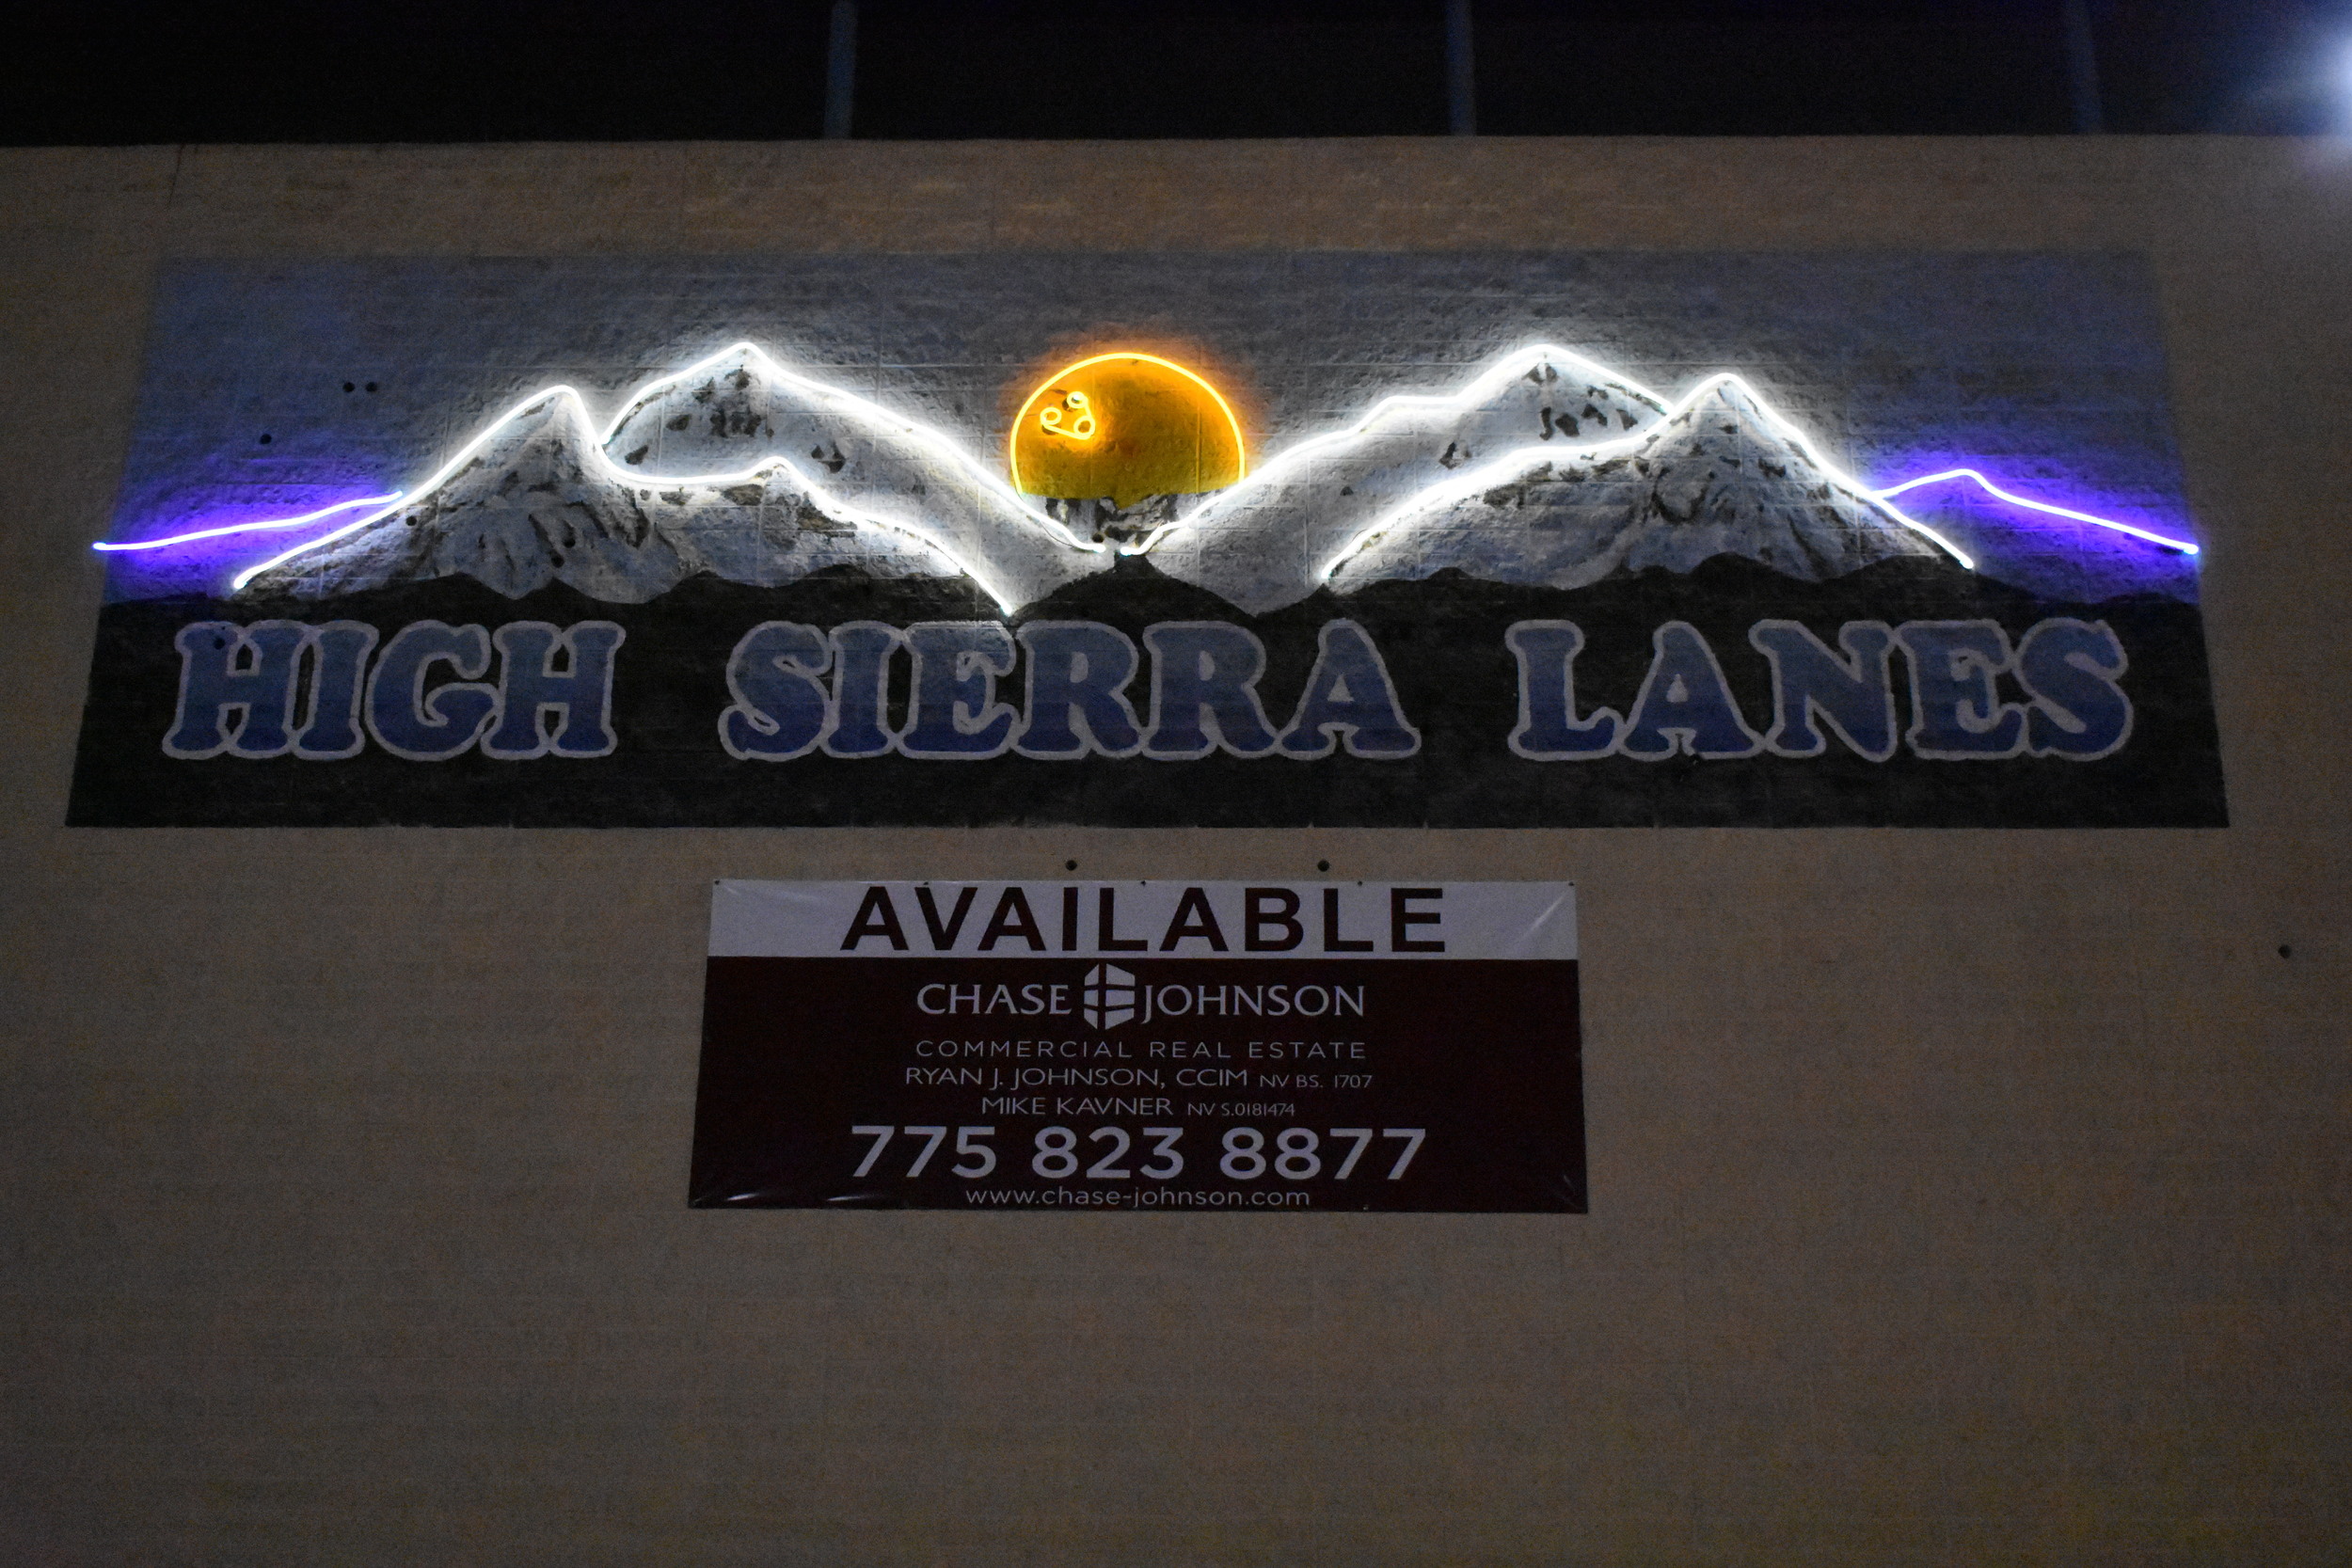 High Sierra Lanes wall mounted signs, Reno, Nevada